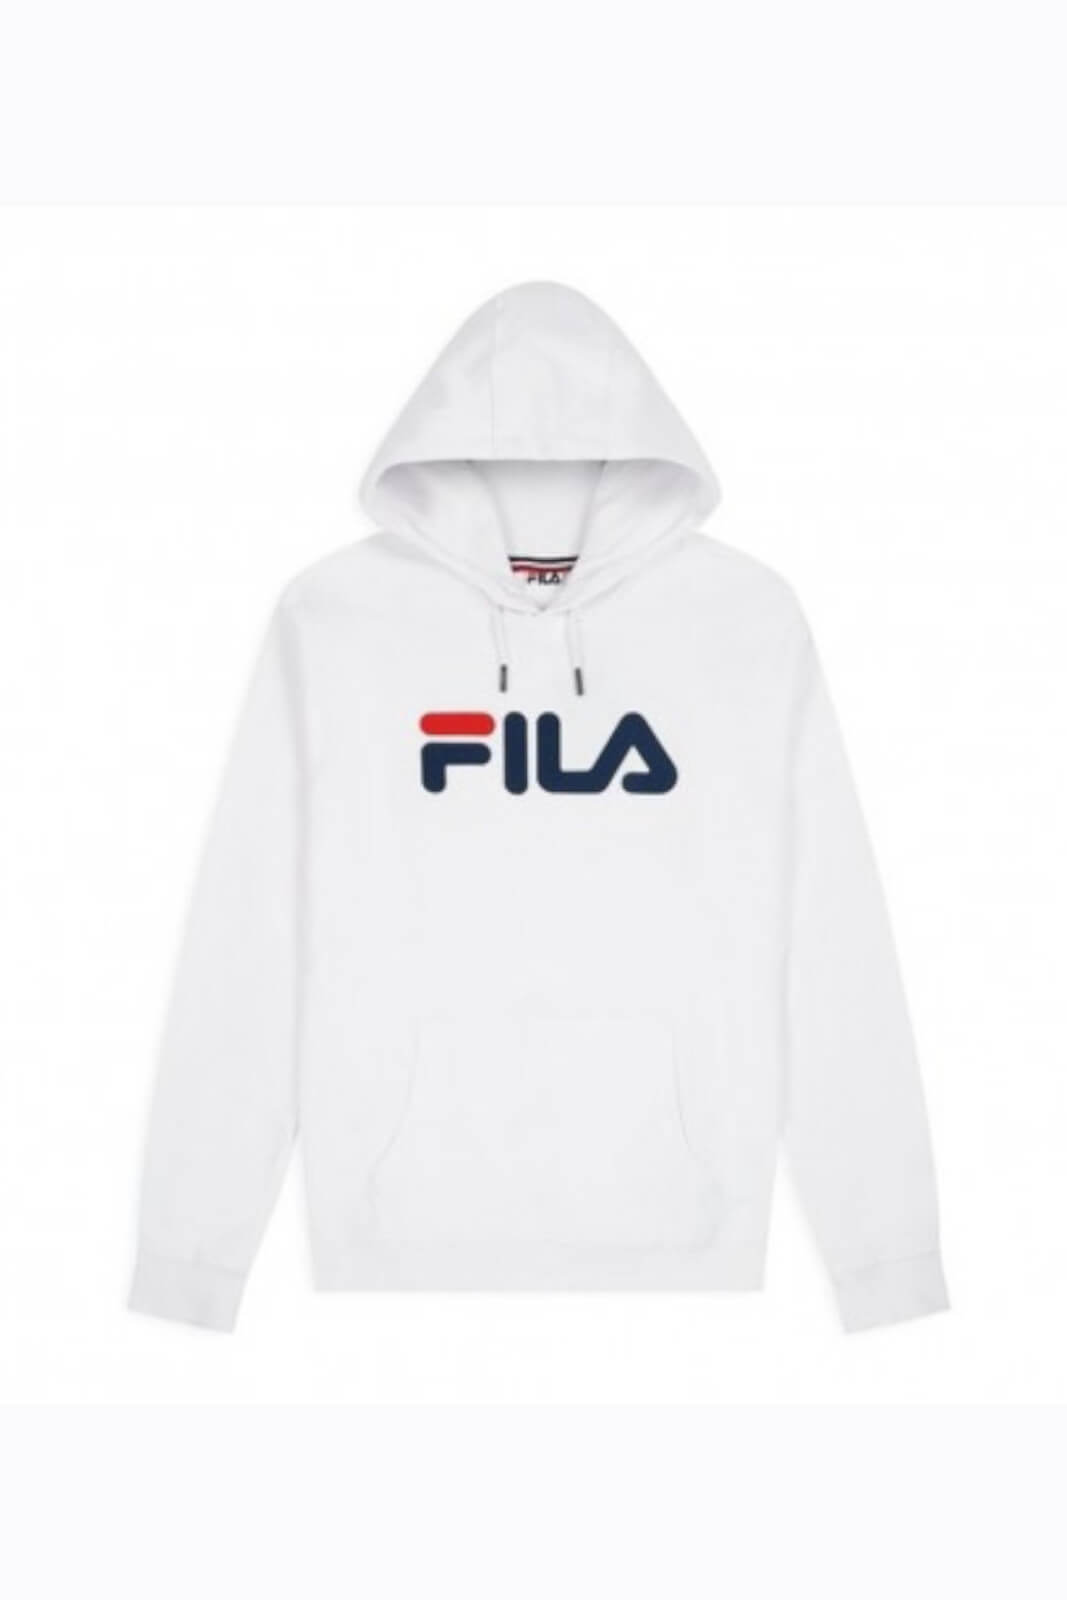 Fila Men's sweatshirt with printed logo